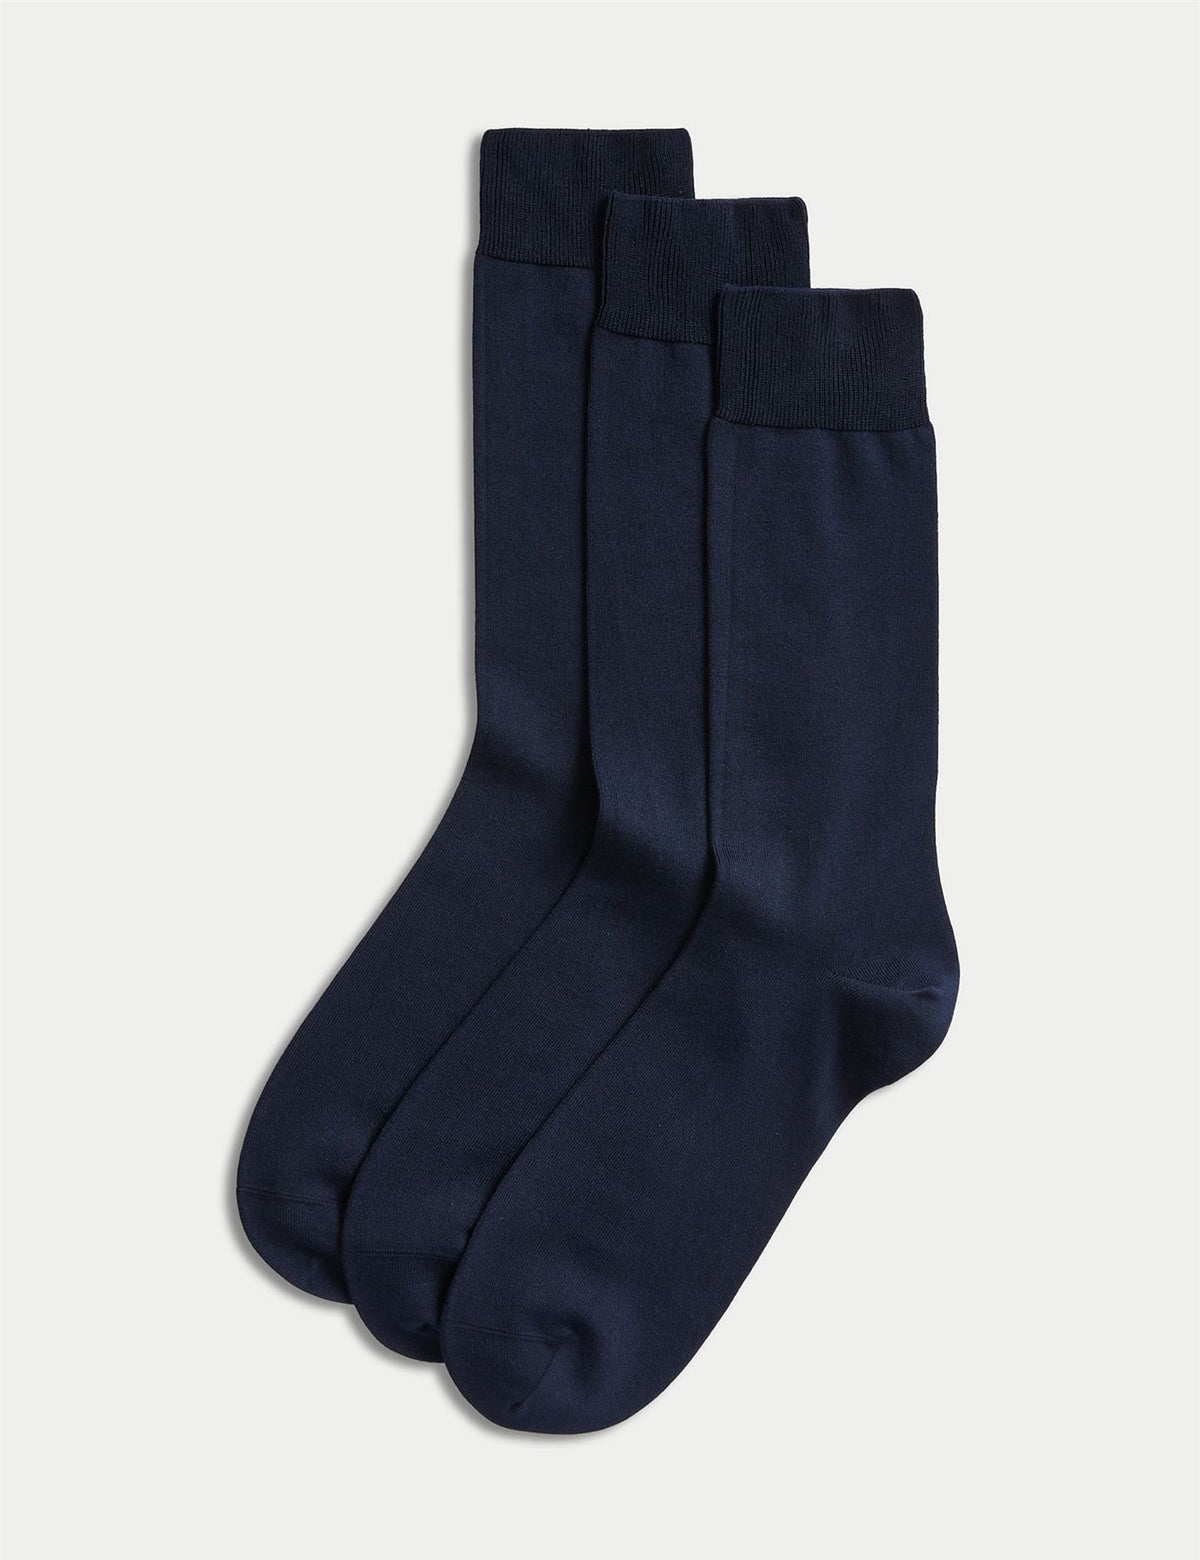 Luxury Egyptian Cotton Socks (3 Pack)